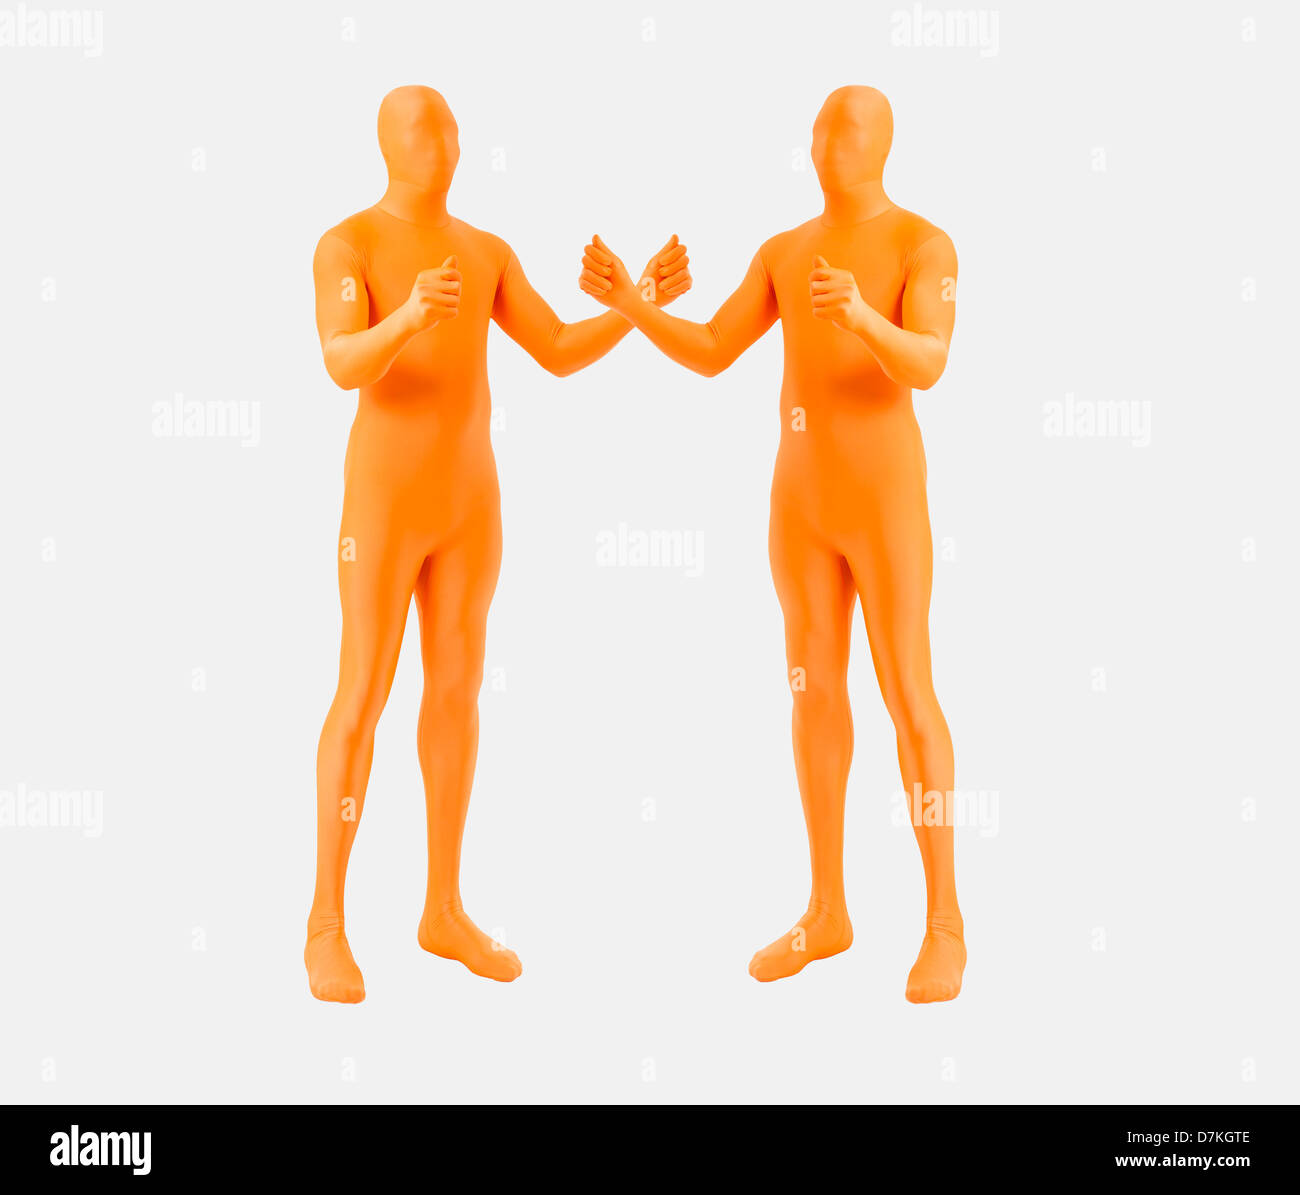 Men in orange zentai gesturing as holding Stock Photo